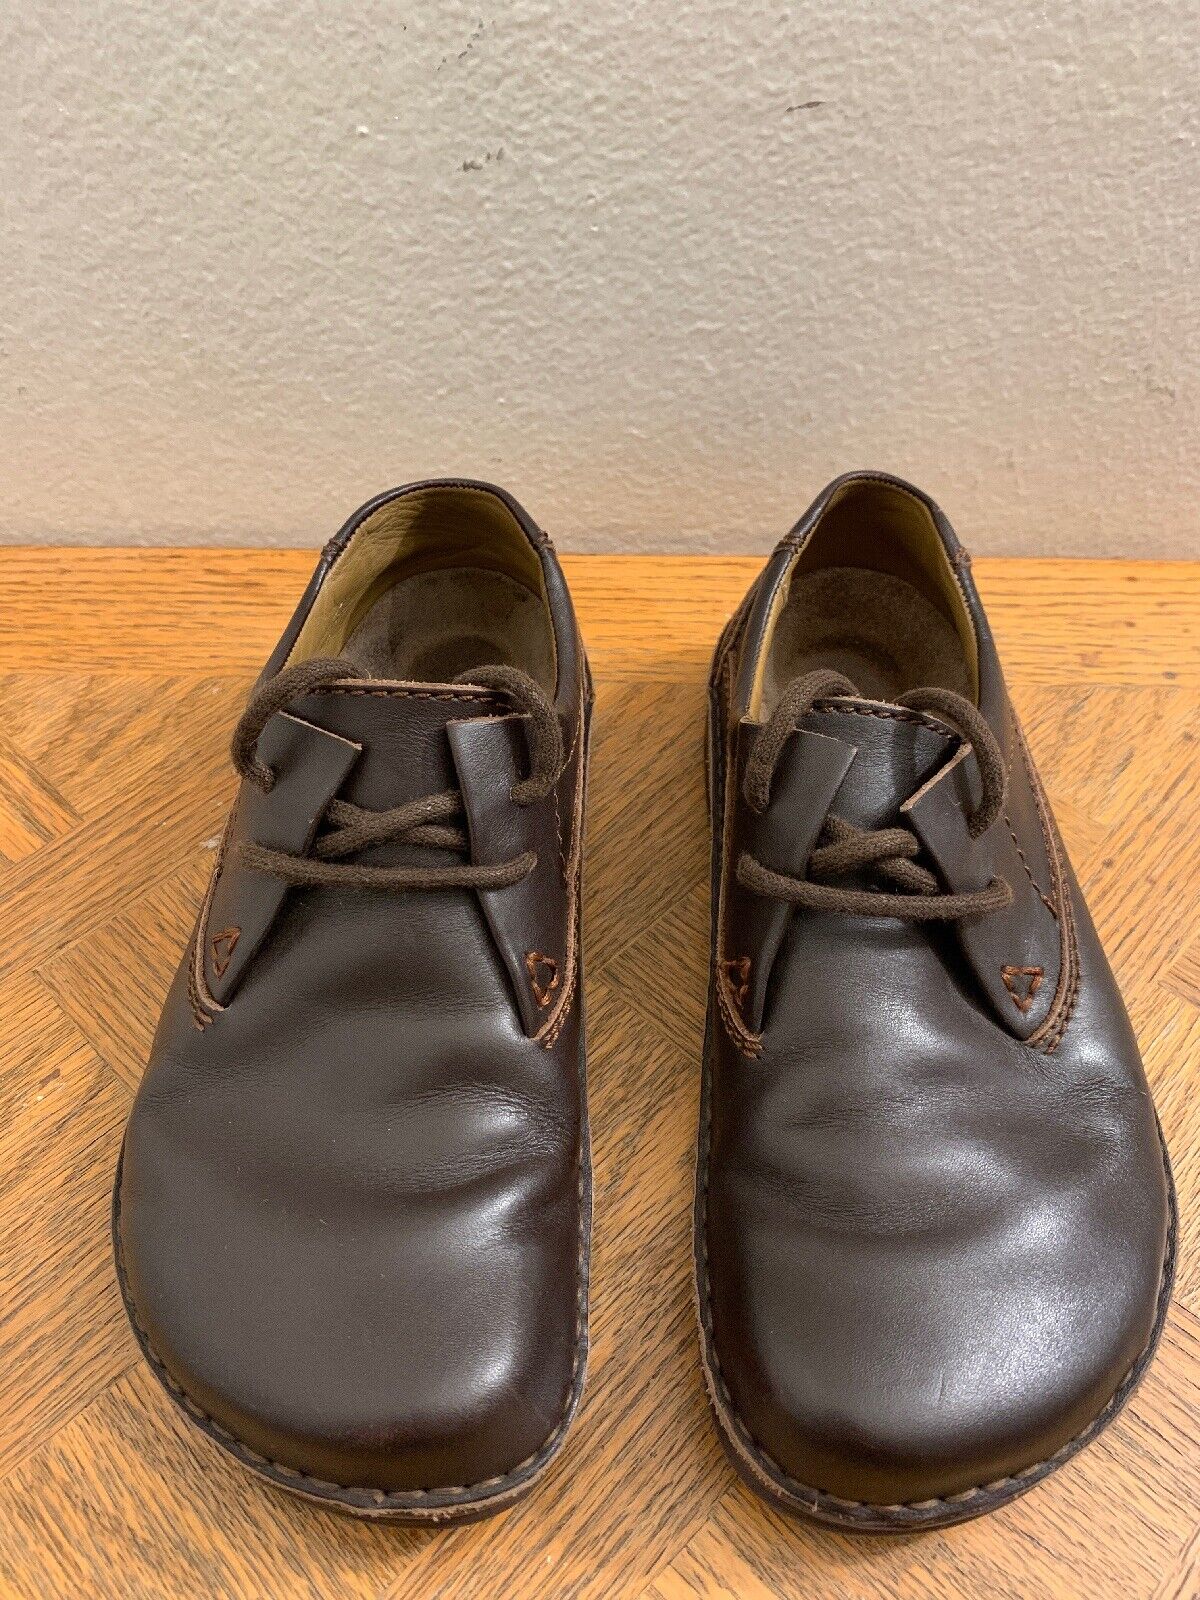 FOOTPRINTS Shoes BIRKENSTOCK Brown Leather Women’s Size 37 / 6-6.5